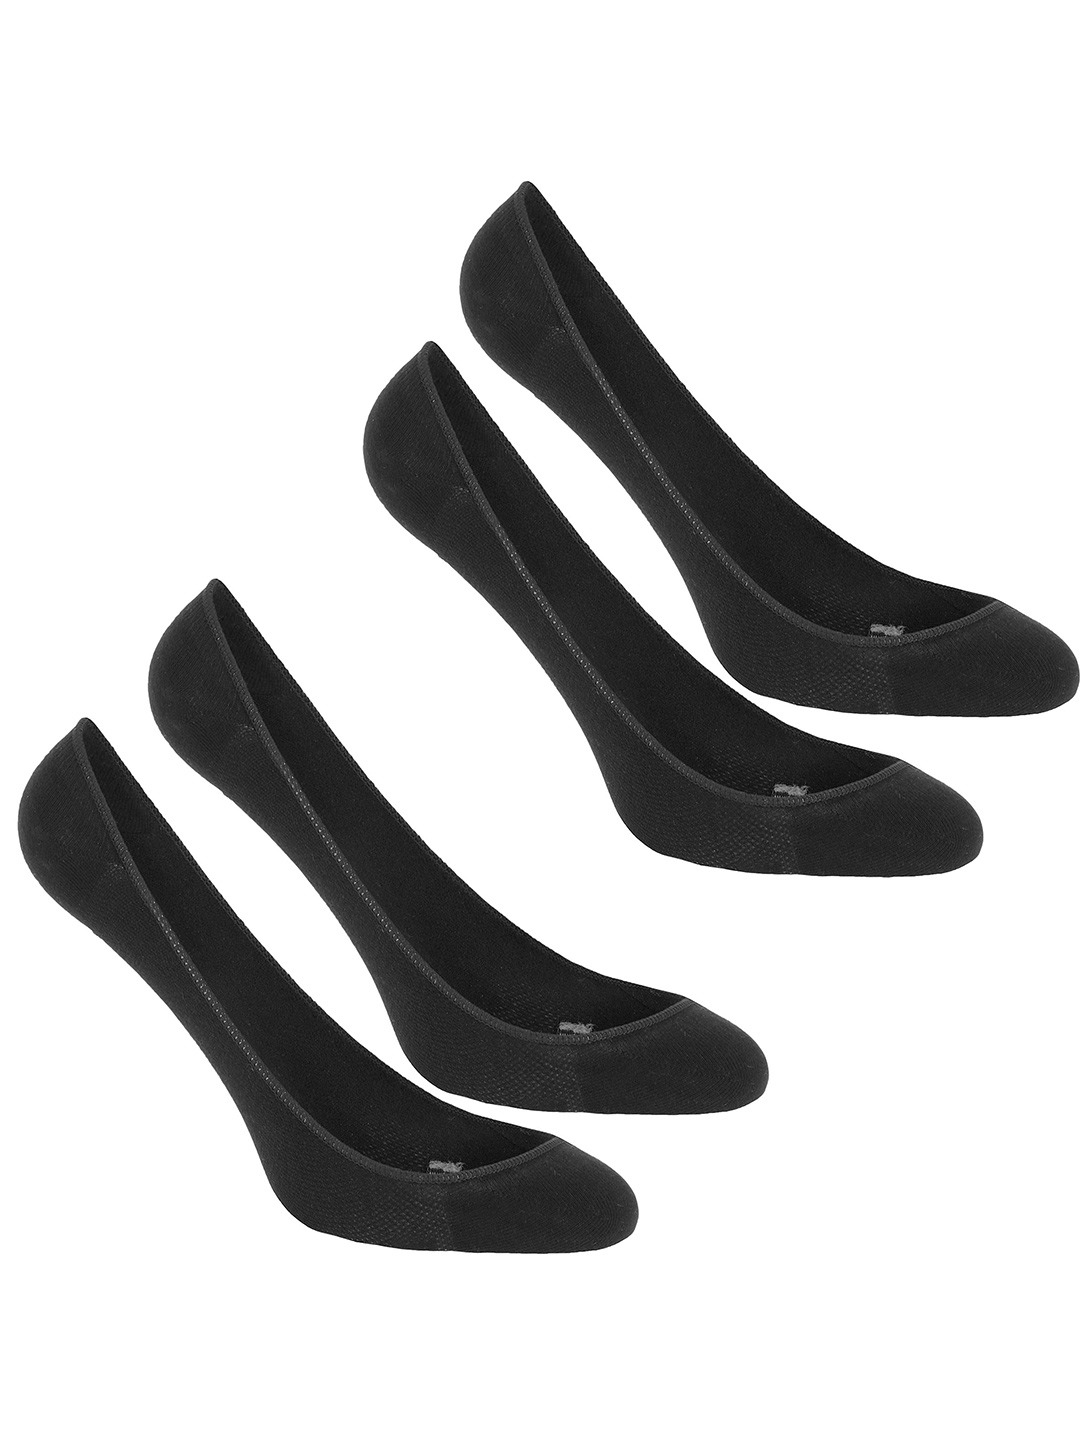 Accessories Socks | Newfeel By Decathlon Unisex Black Pack Of 4 Socks - DO81066